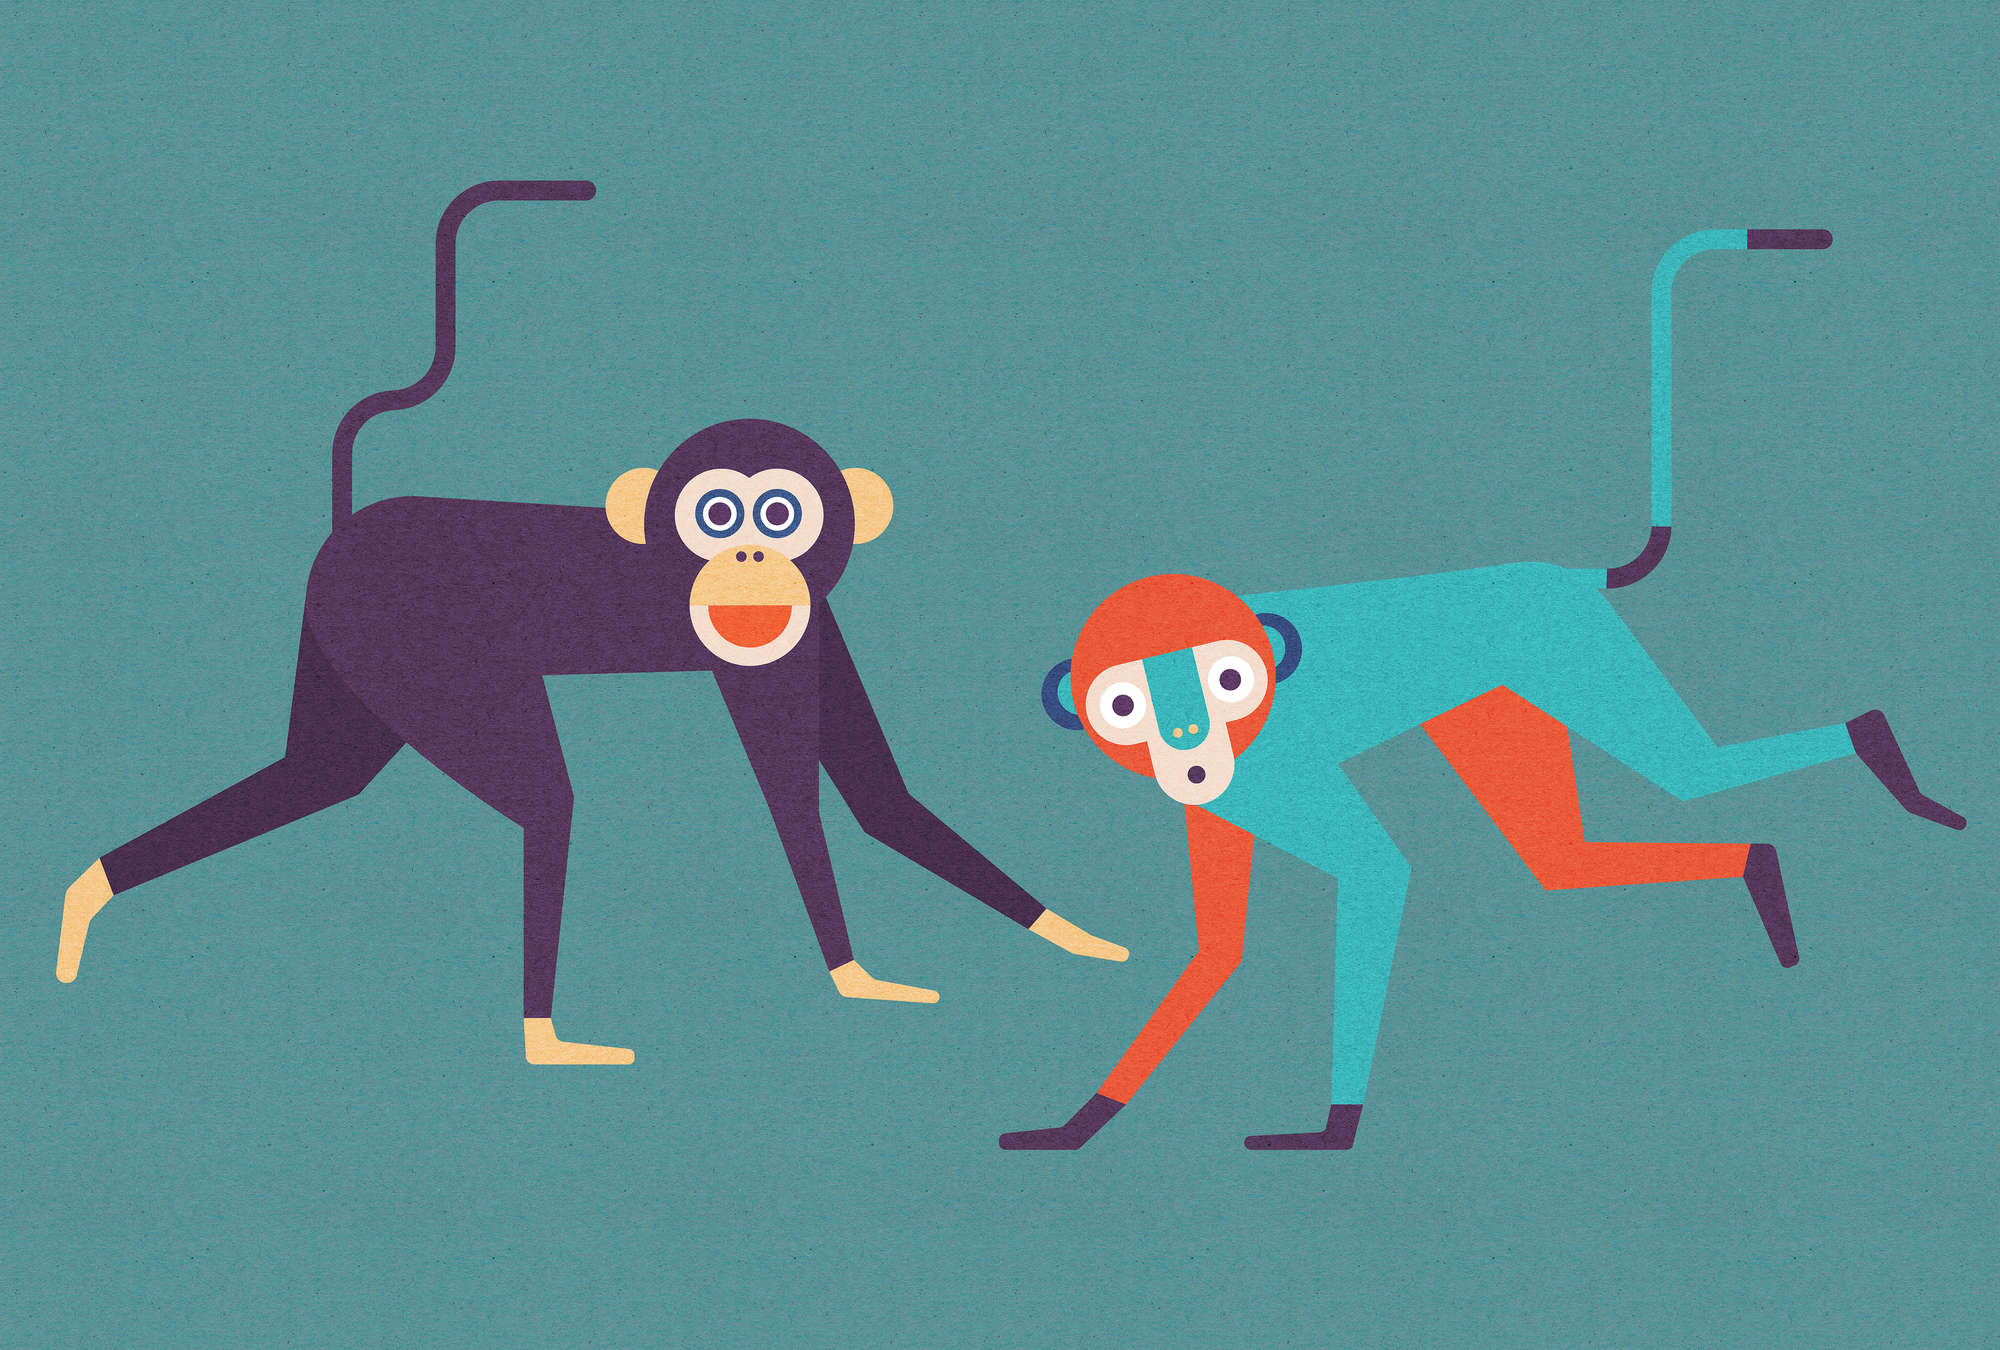             Monkey Busines 1 - Papel pintado en estructura de cartón, pandilla de monos en estilo cómic - Beige, Naranja | Vellón liso Premium
        